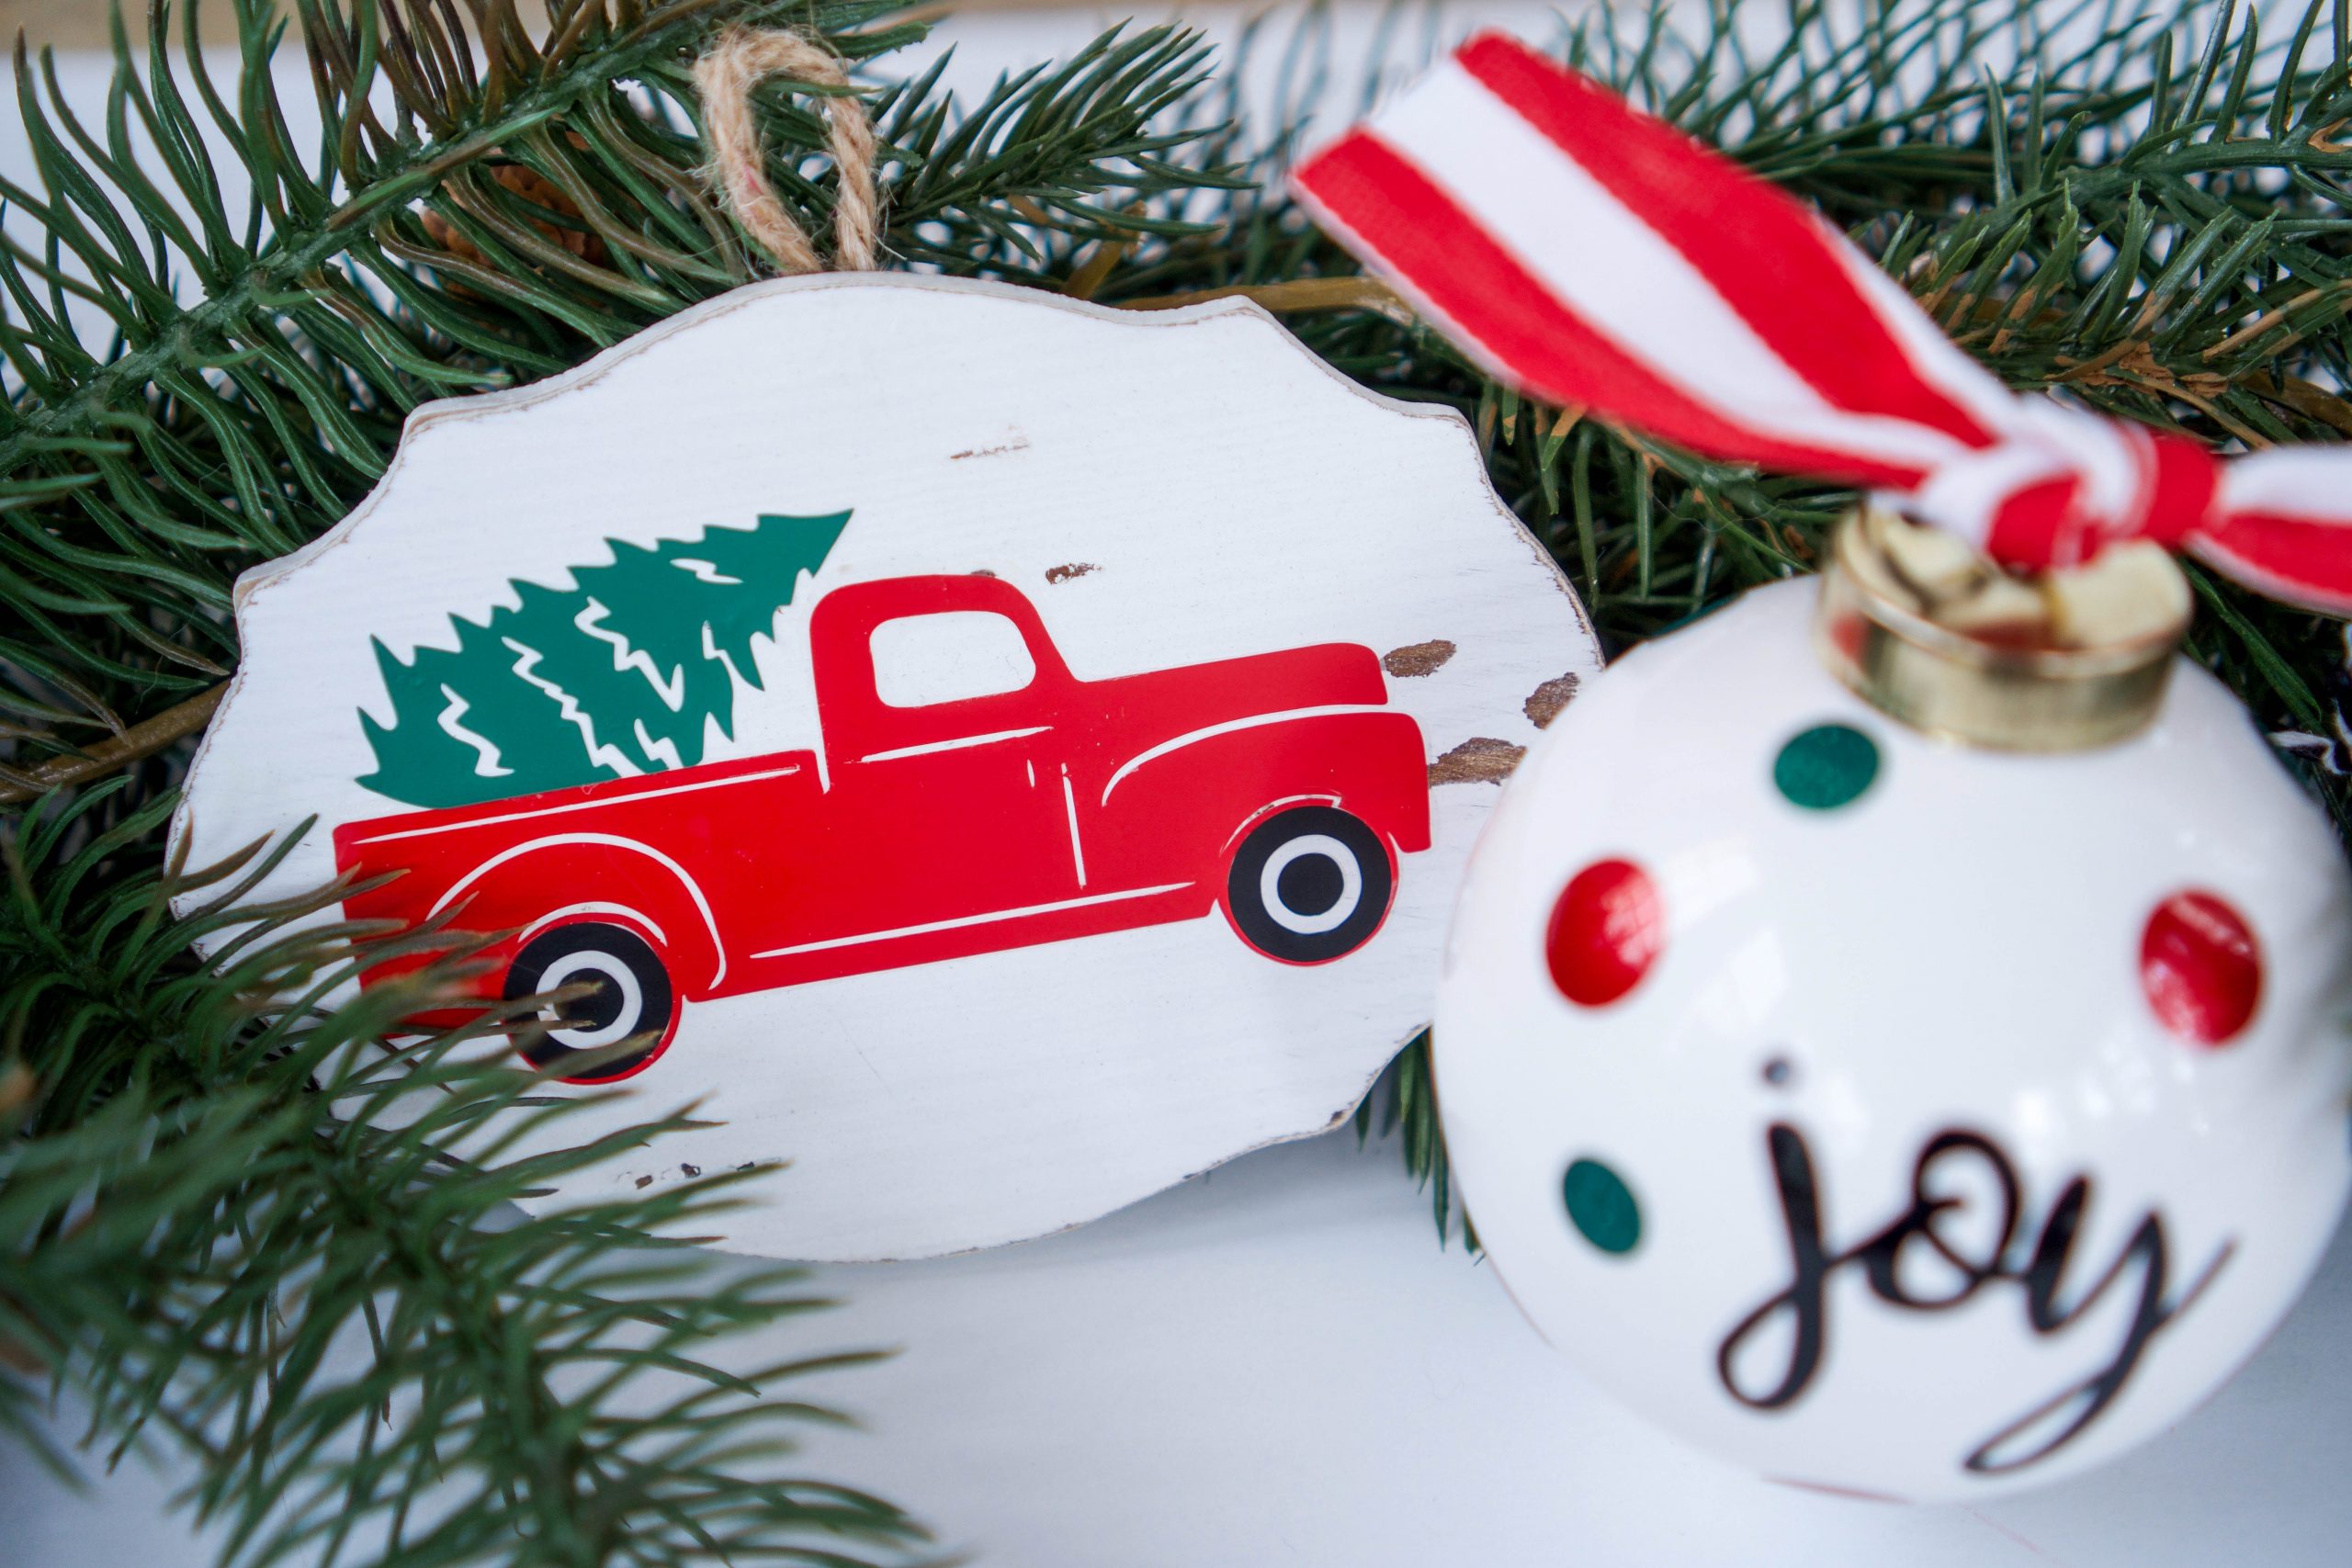 Creating Christmas Ornaments Using Heat Transfer Vinyl and Adhesive Vinyl